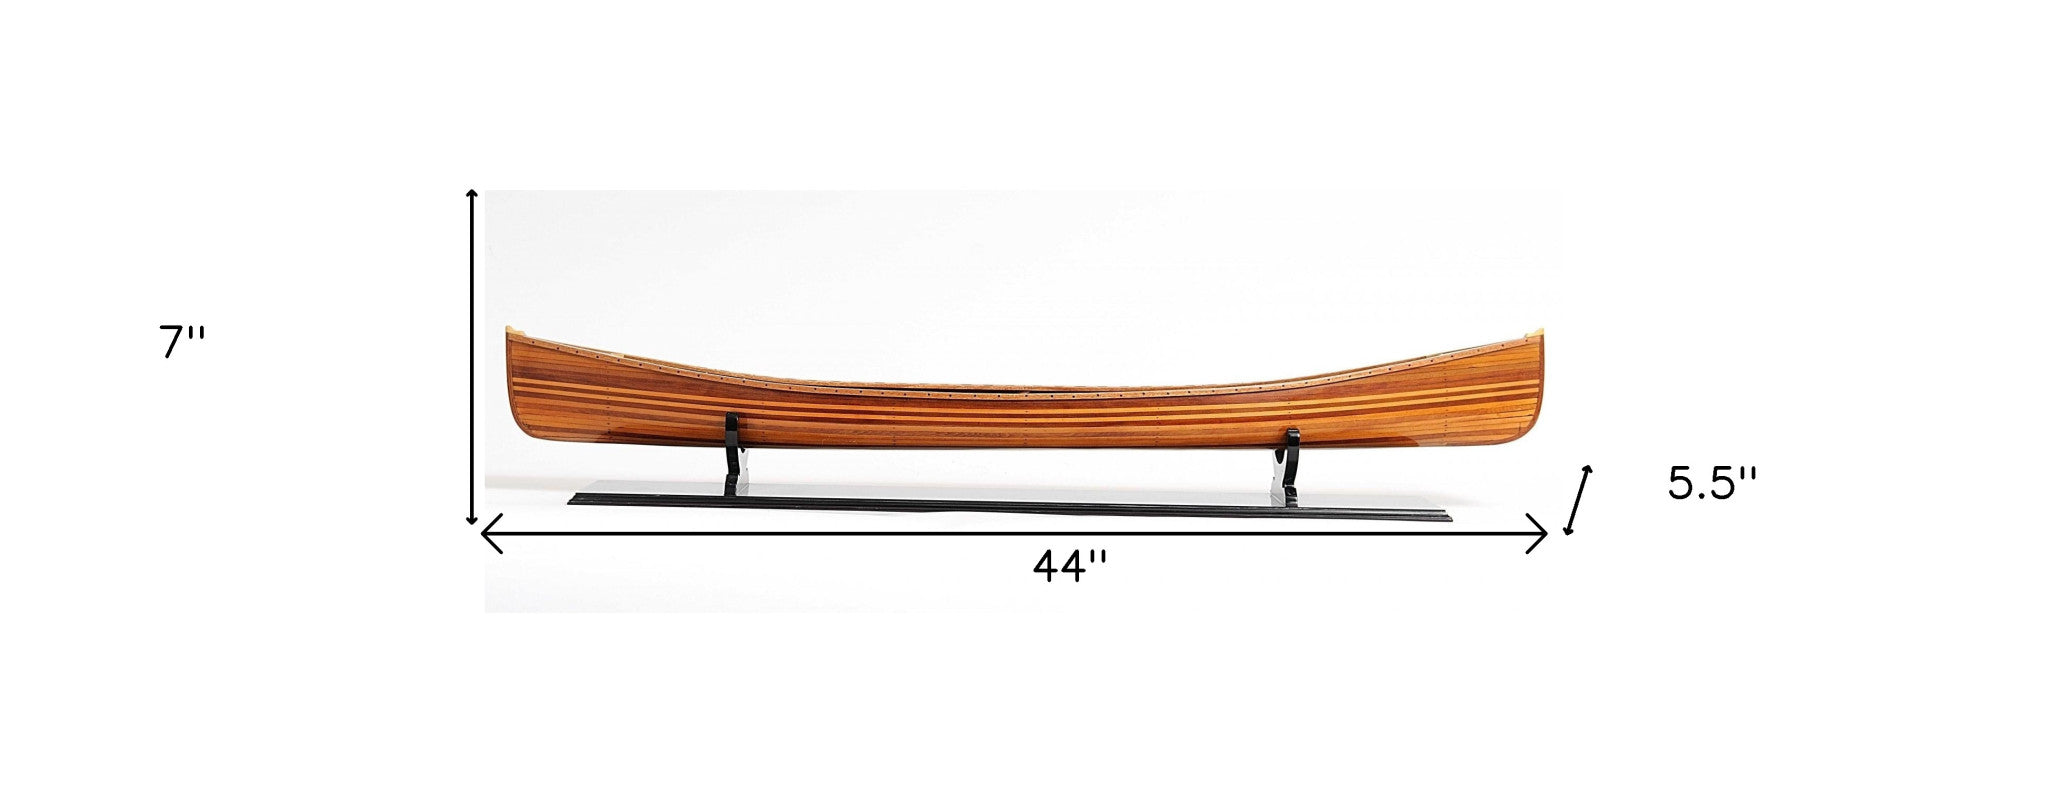 7" X 44" X 5.5" Canoe Model